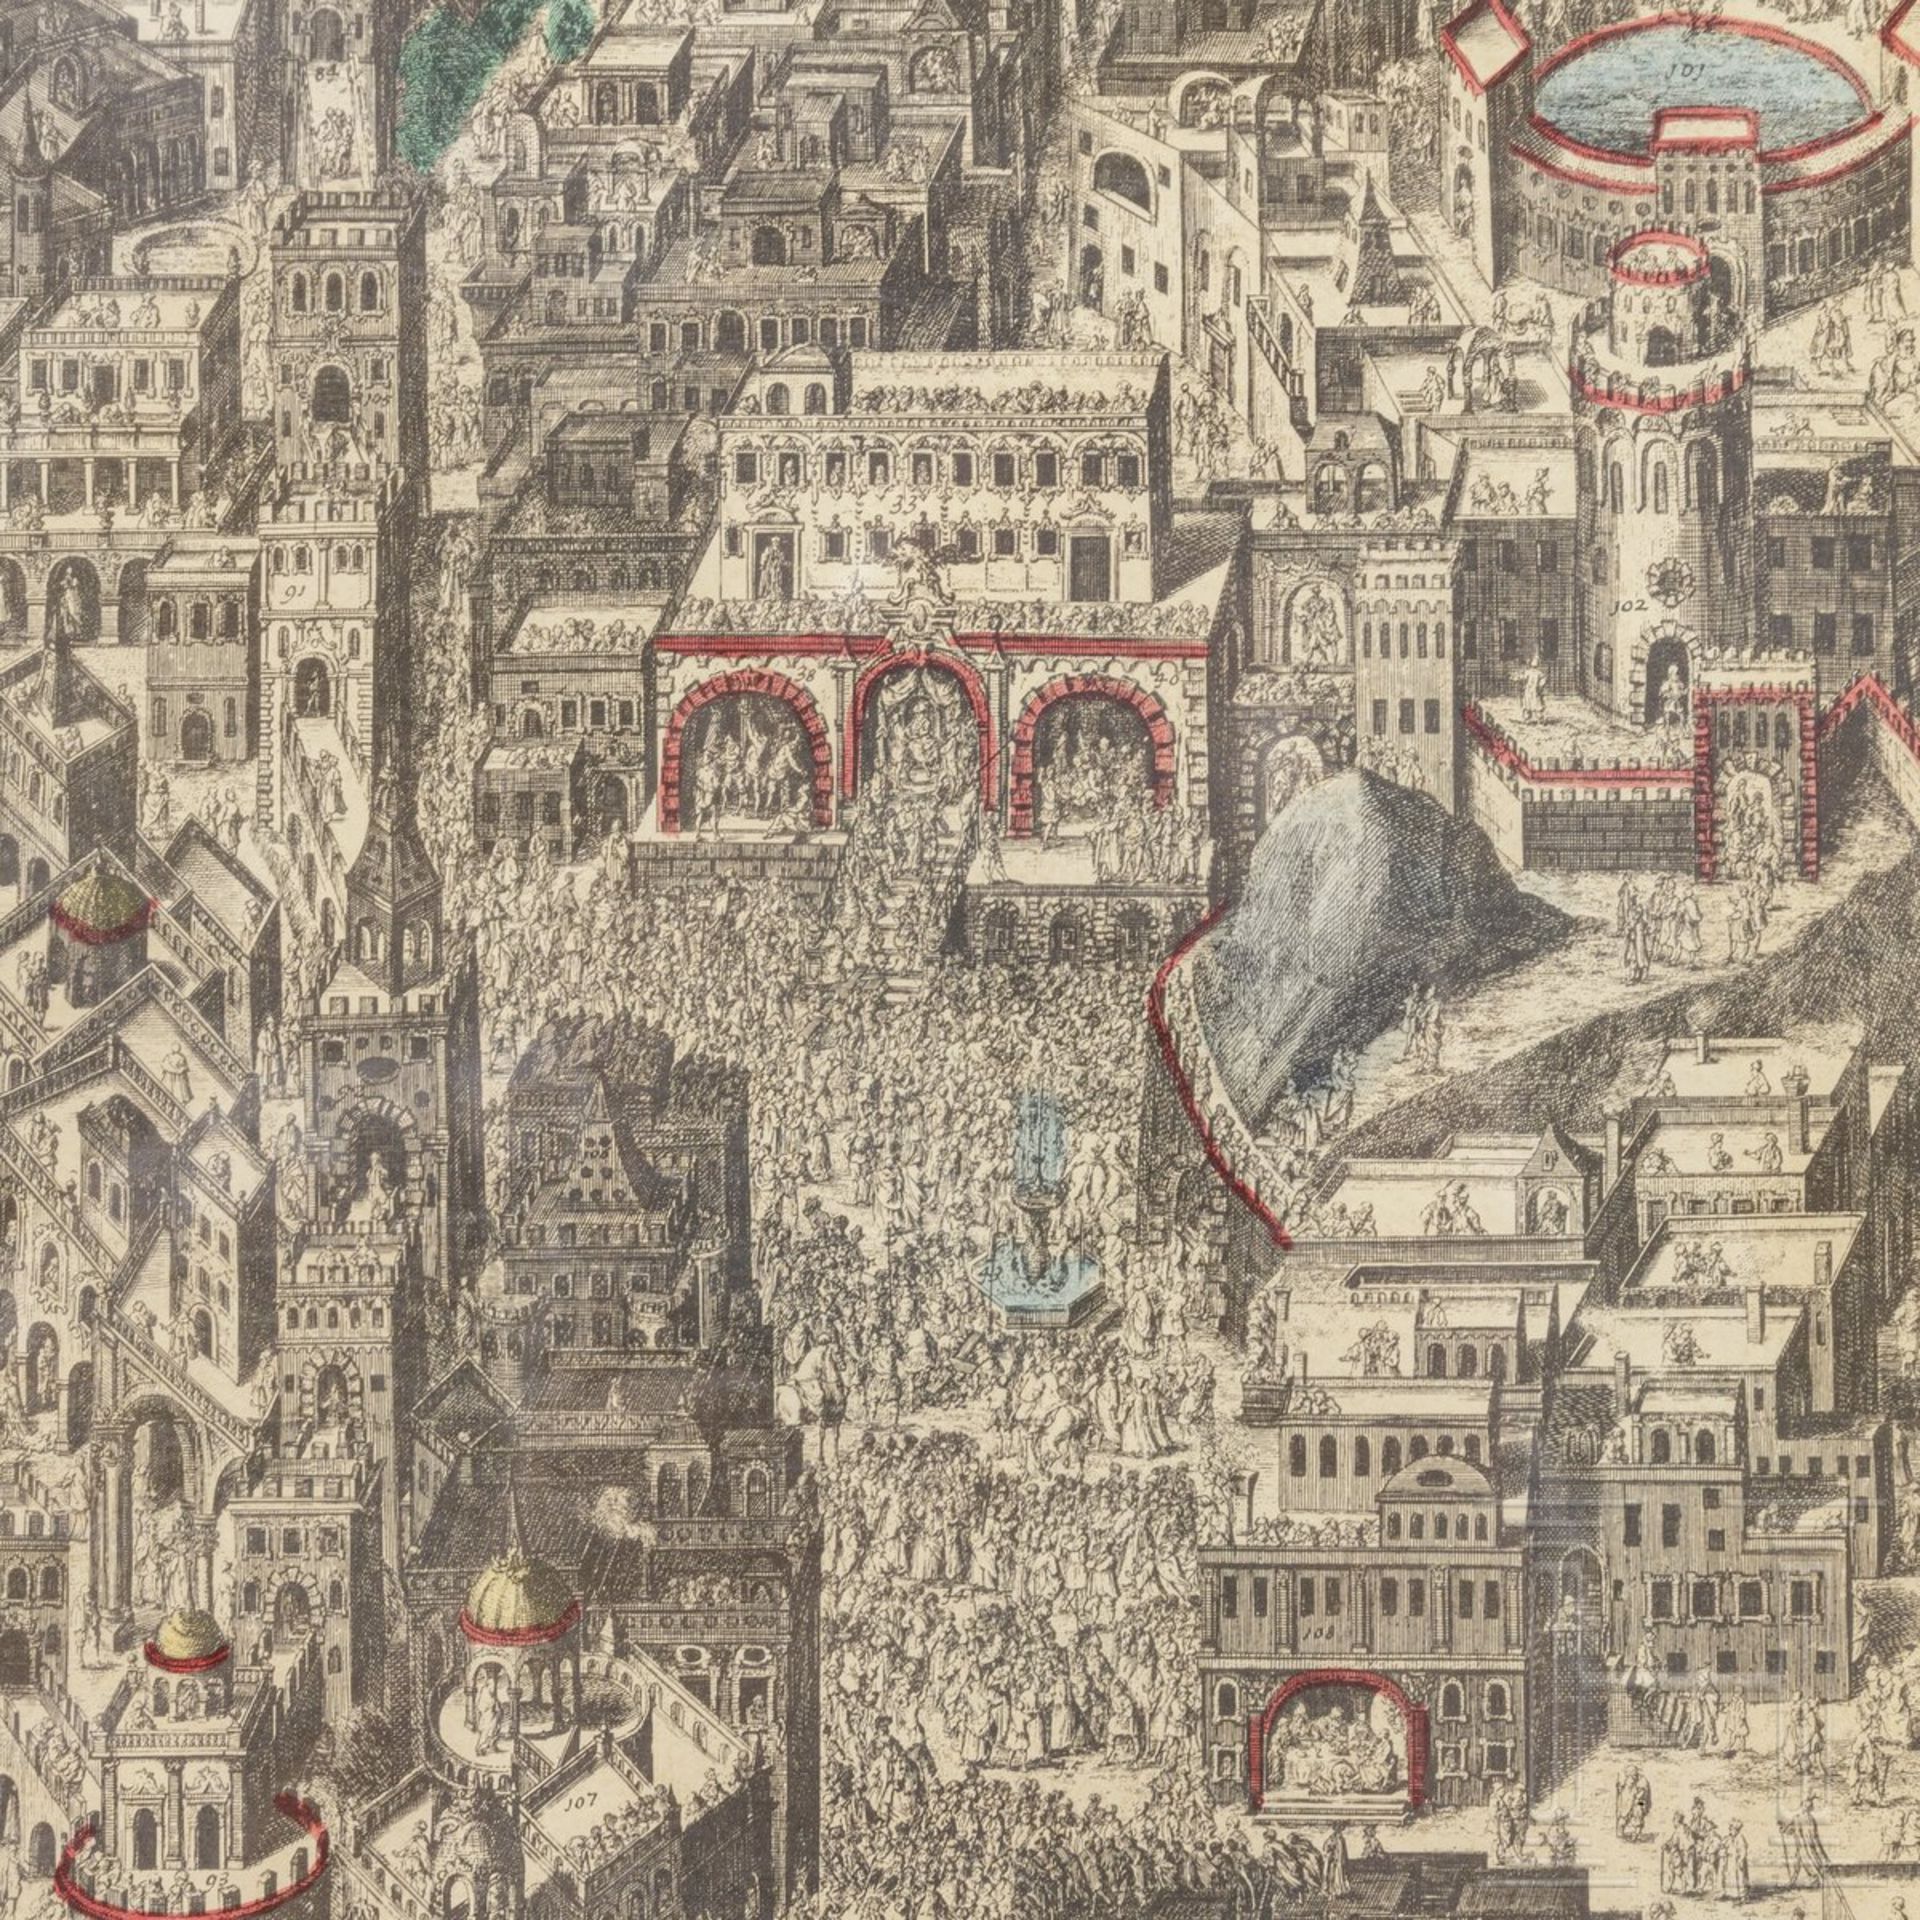 Johann Daniel Herz (1693 - 1754) - Gesamtpanorama der Stadt Jerusalem, kolorierter Druck, 1735 - Image 4 of 9